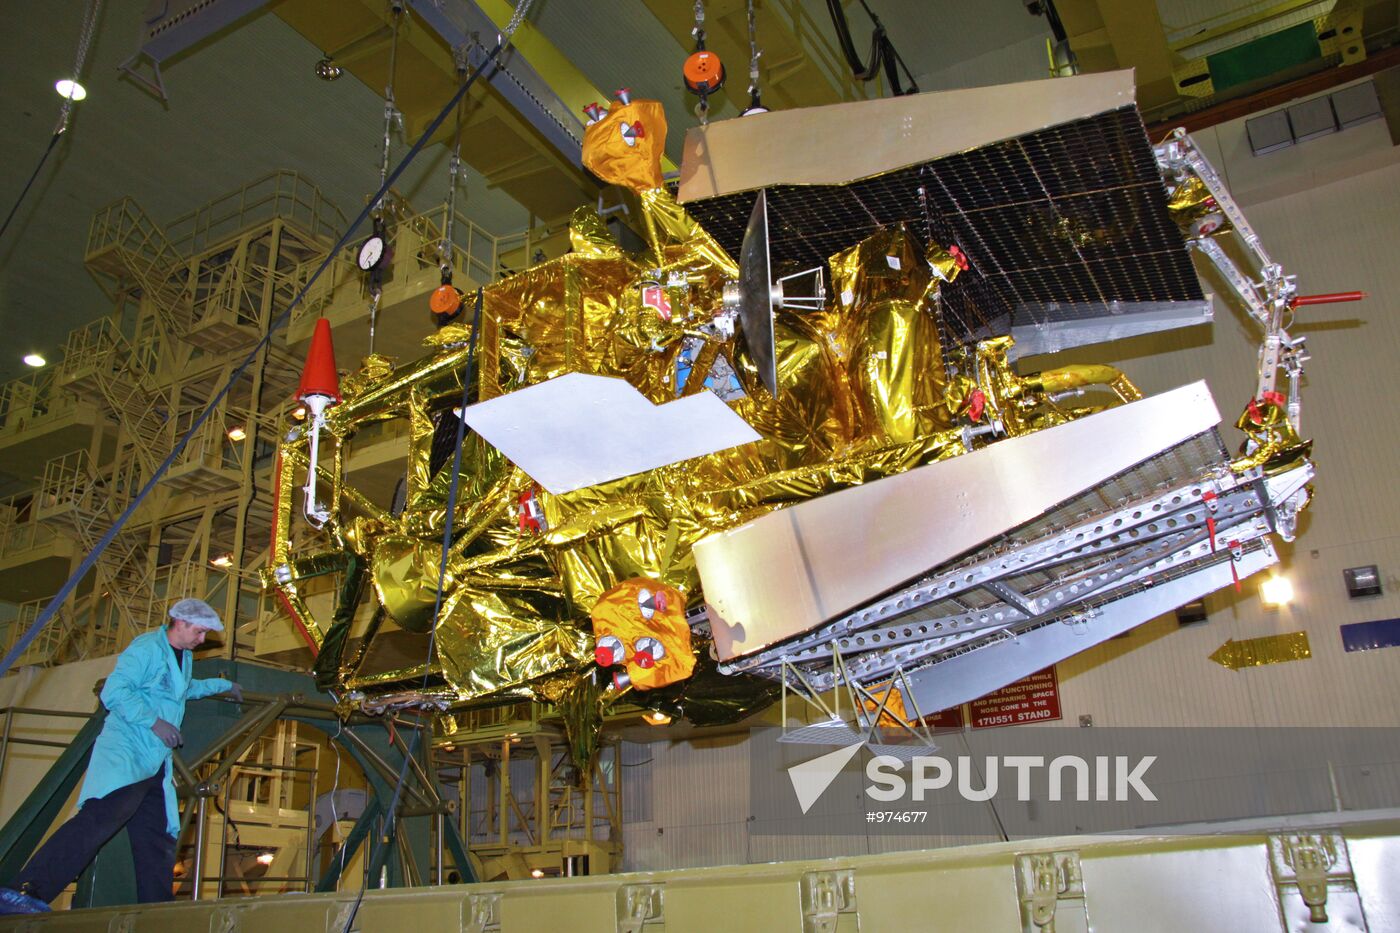 Fobos-Grunt spacecraft at Baikonur space center